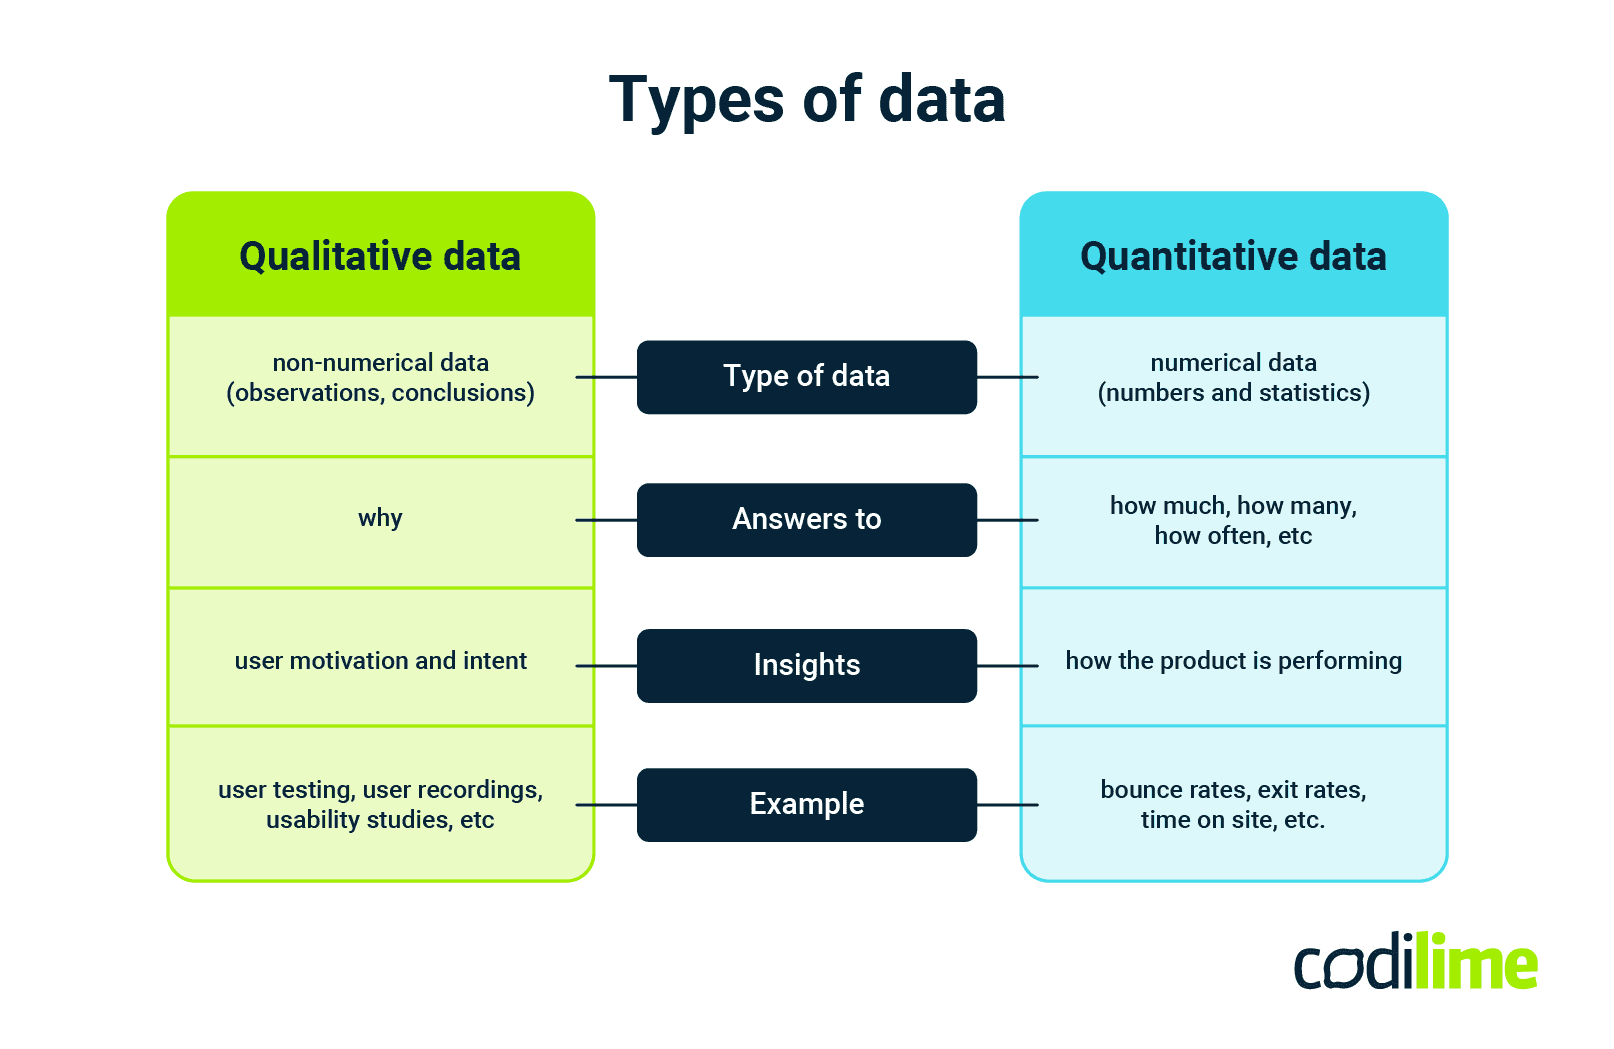 Quantitative and qualitative data